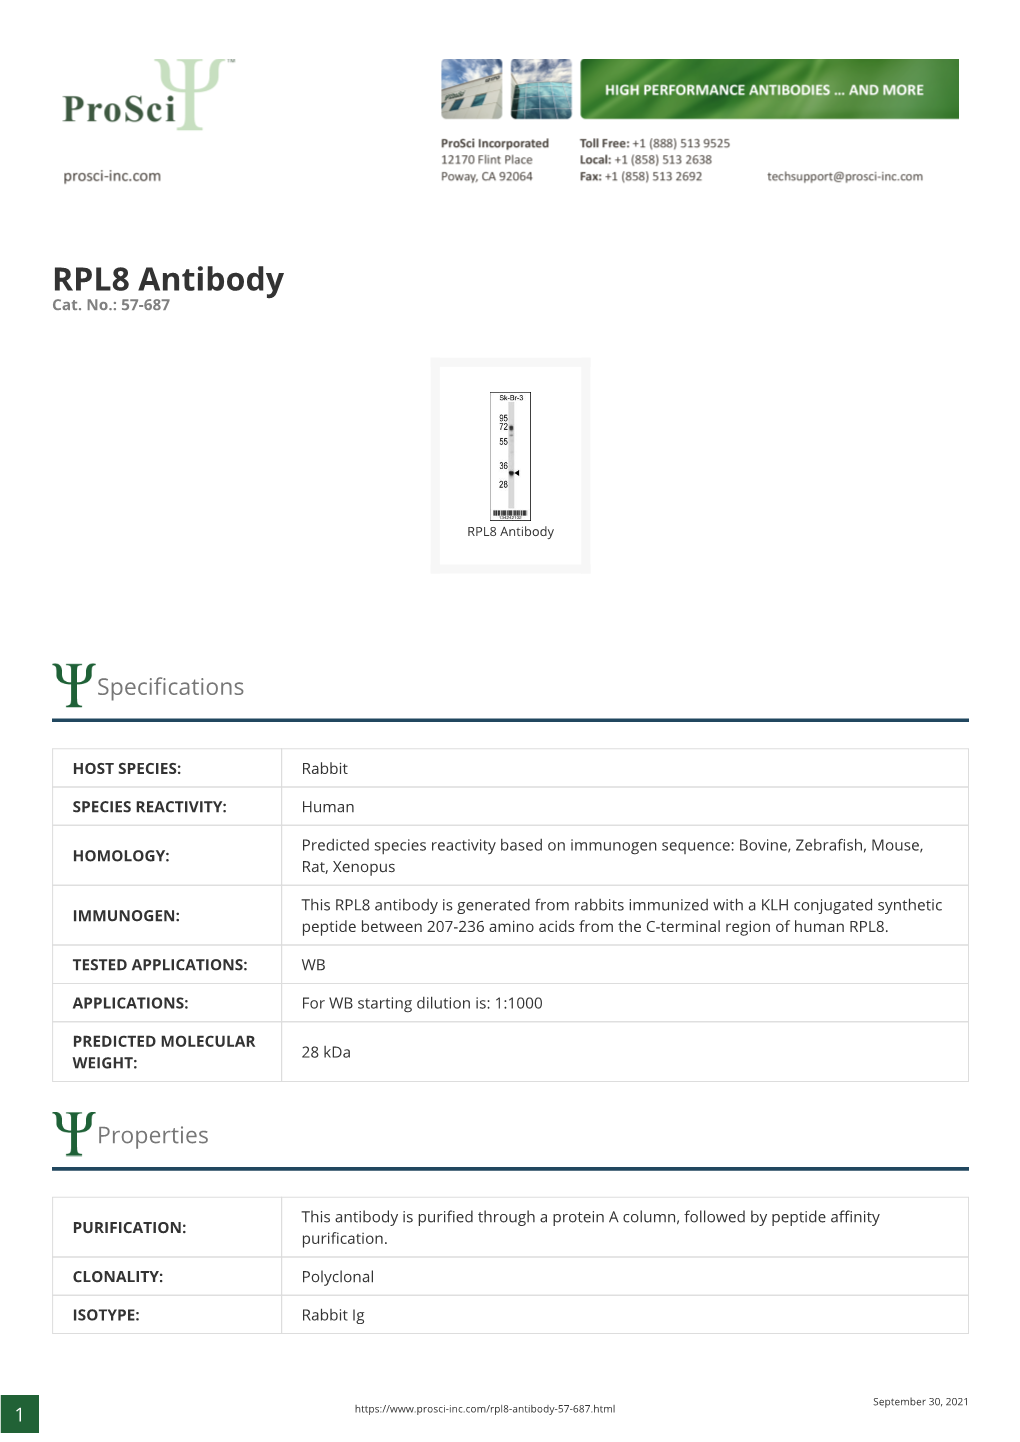 RPL8 Antibody Cat